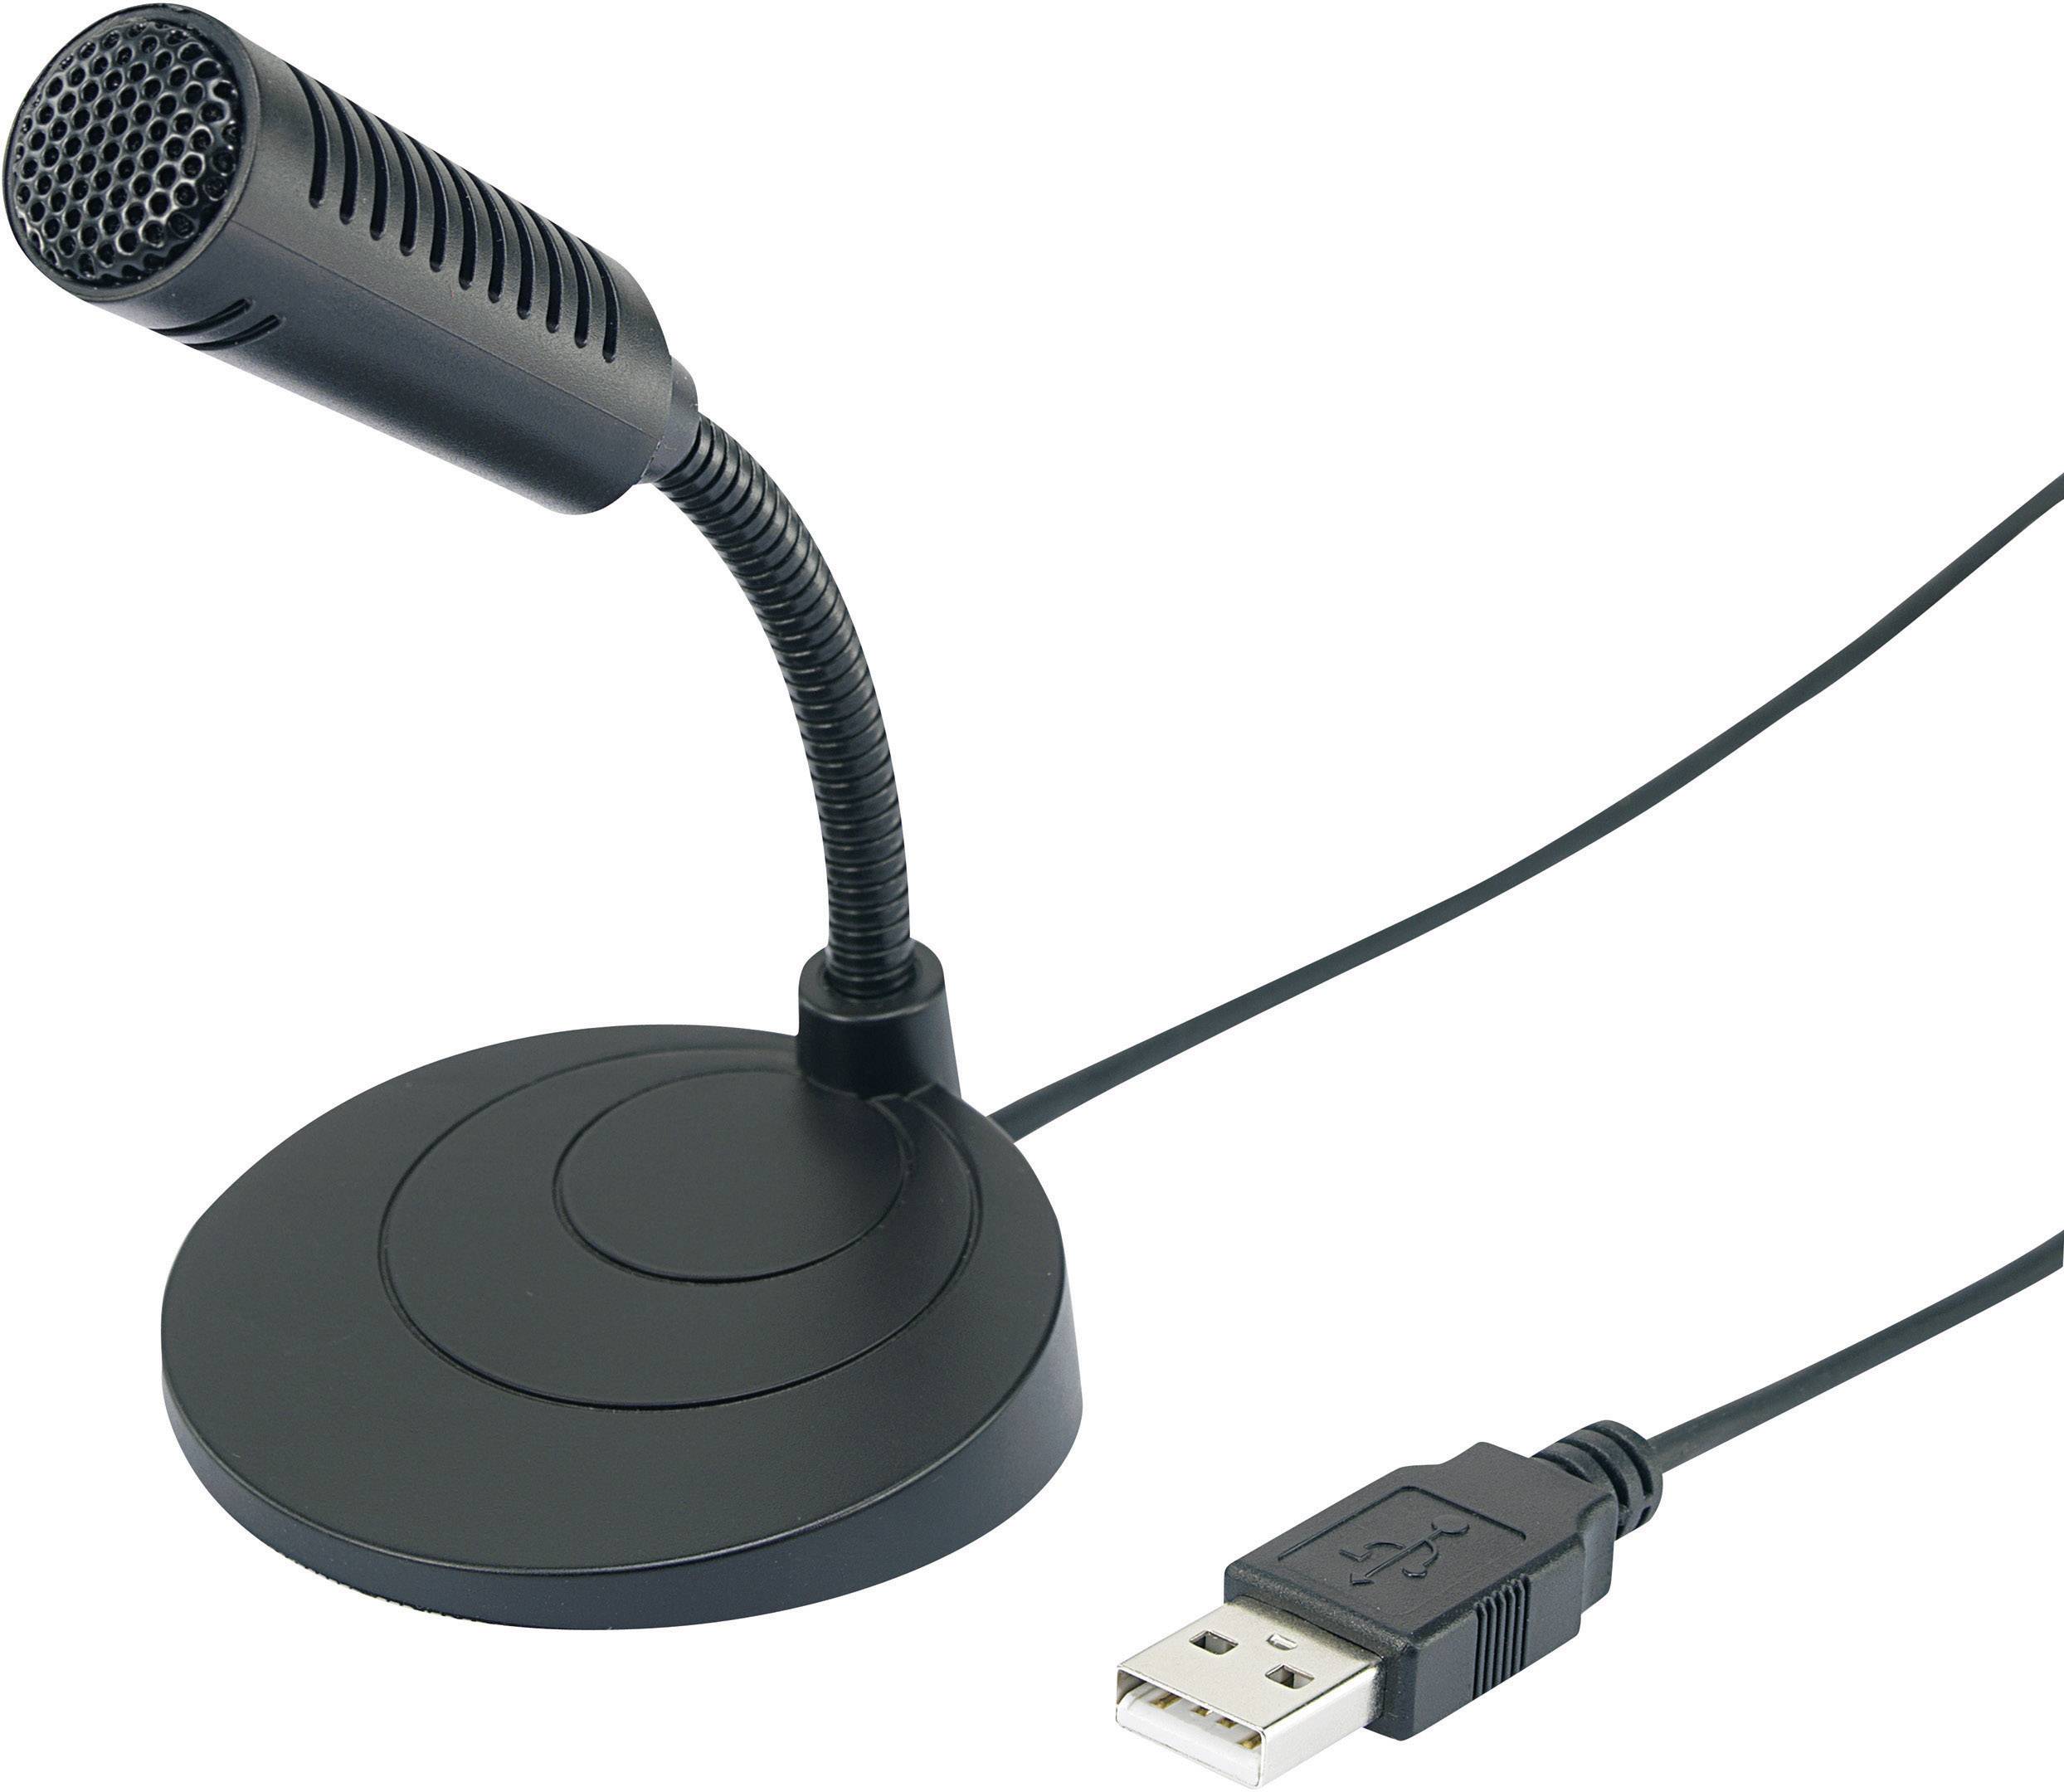 Flash микрофон. Юсб микрофон роуд. Kingway микрофон USB. Микрофон для ПК (USB) ot-pcs01. Pm80 микрофон для ПК.